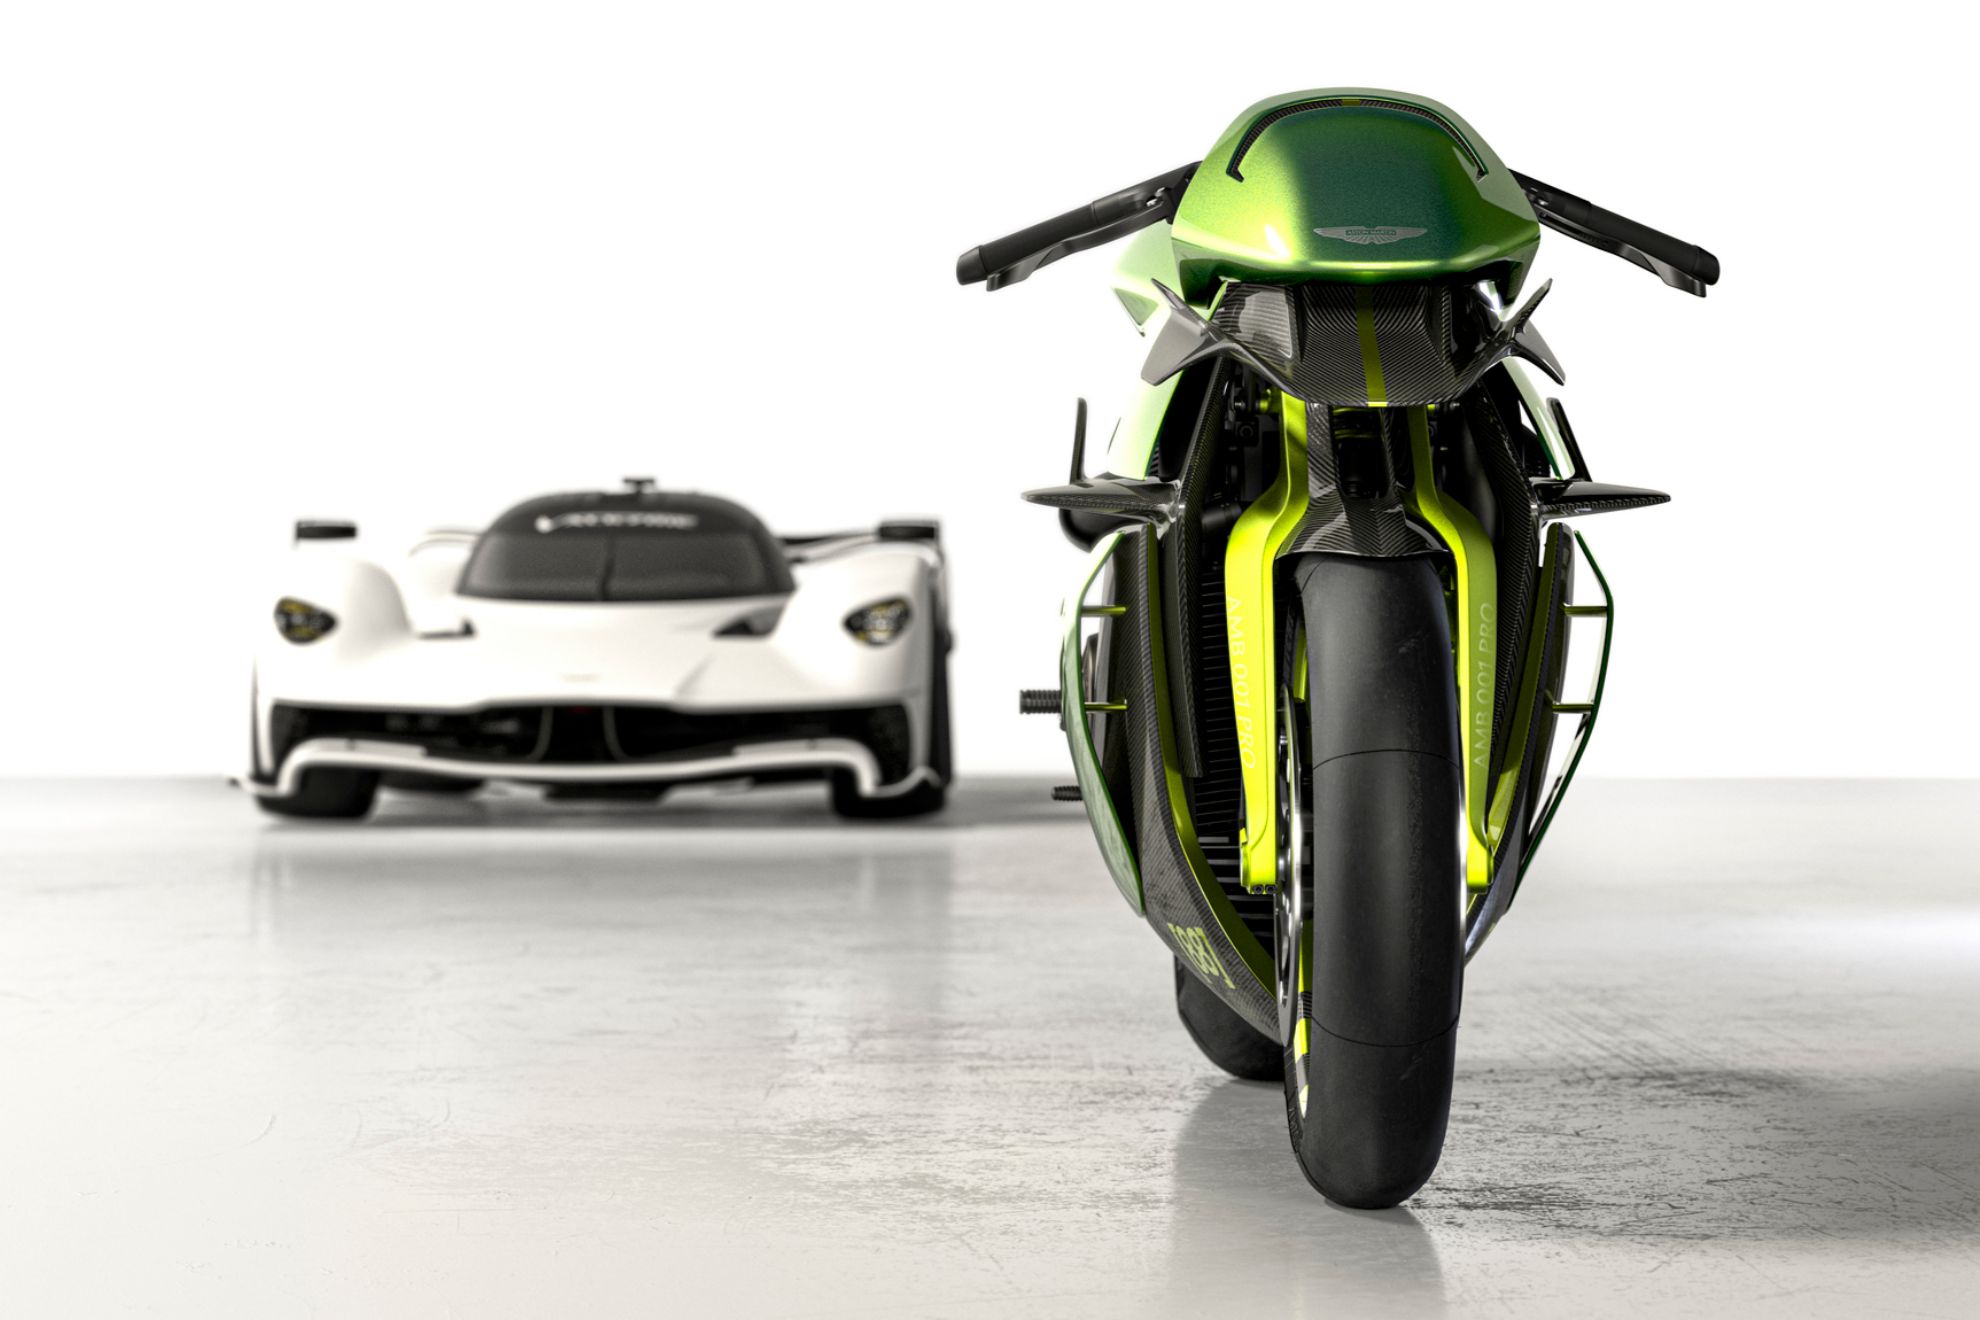 La moto de Aston Martin se inspira en otra máquina mágica, el Valkyrie AMR Pro.